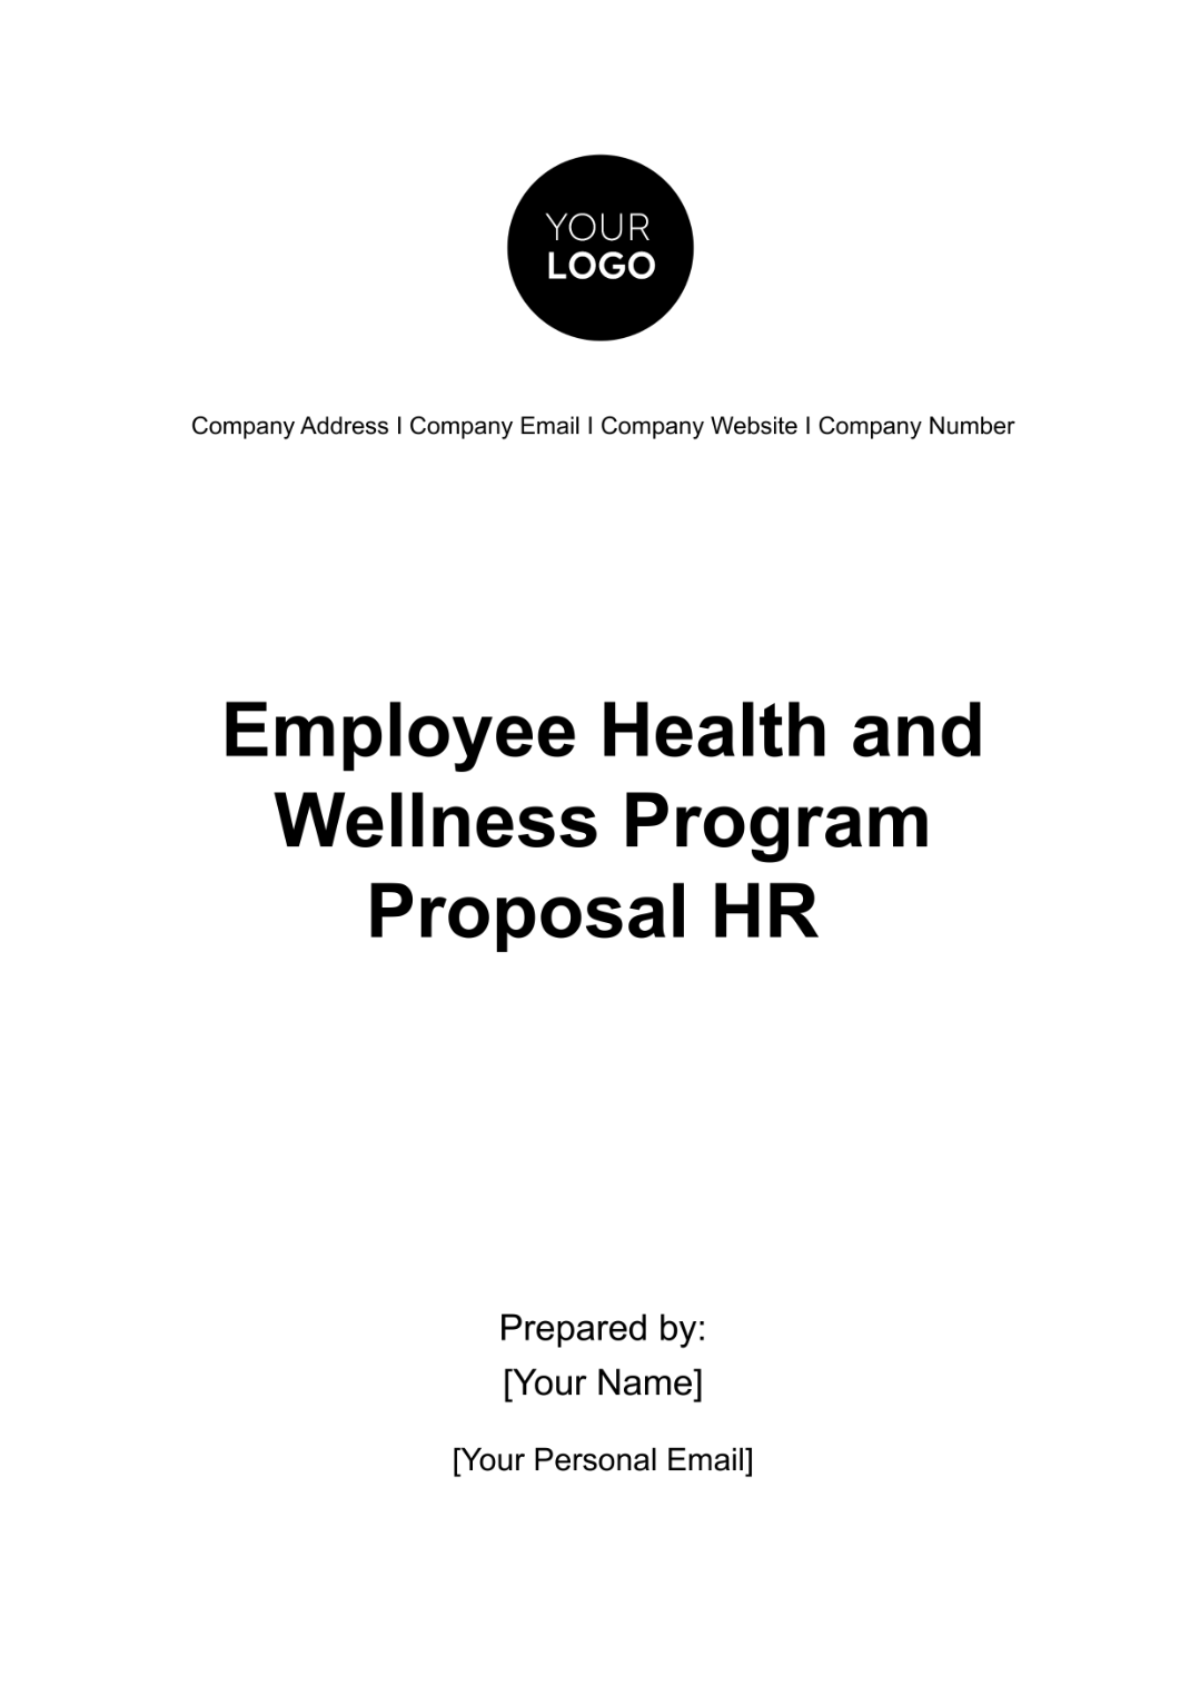 Free Employee Health and Wellness Program Proposal HR Template